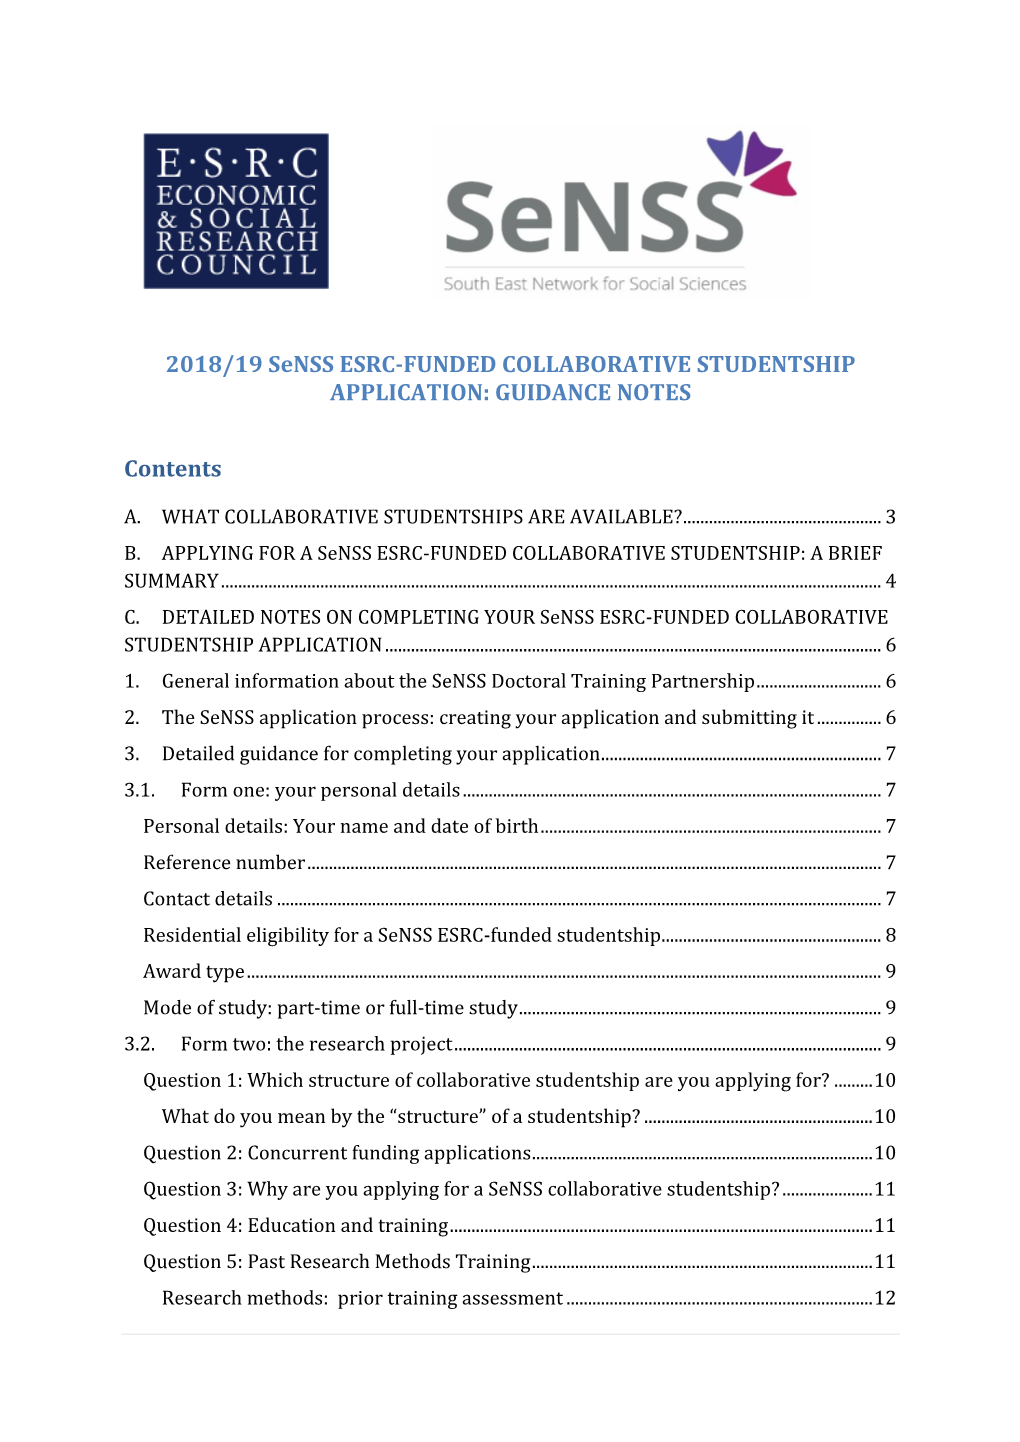 2018/19 Senss ESRC-FUNDED COLLABORATIVE STUDENTSHIP APPLICATION: GUIDANCE NOTES